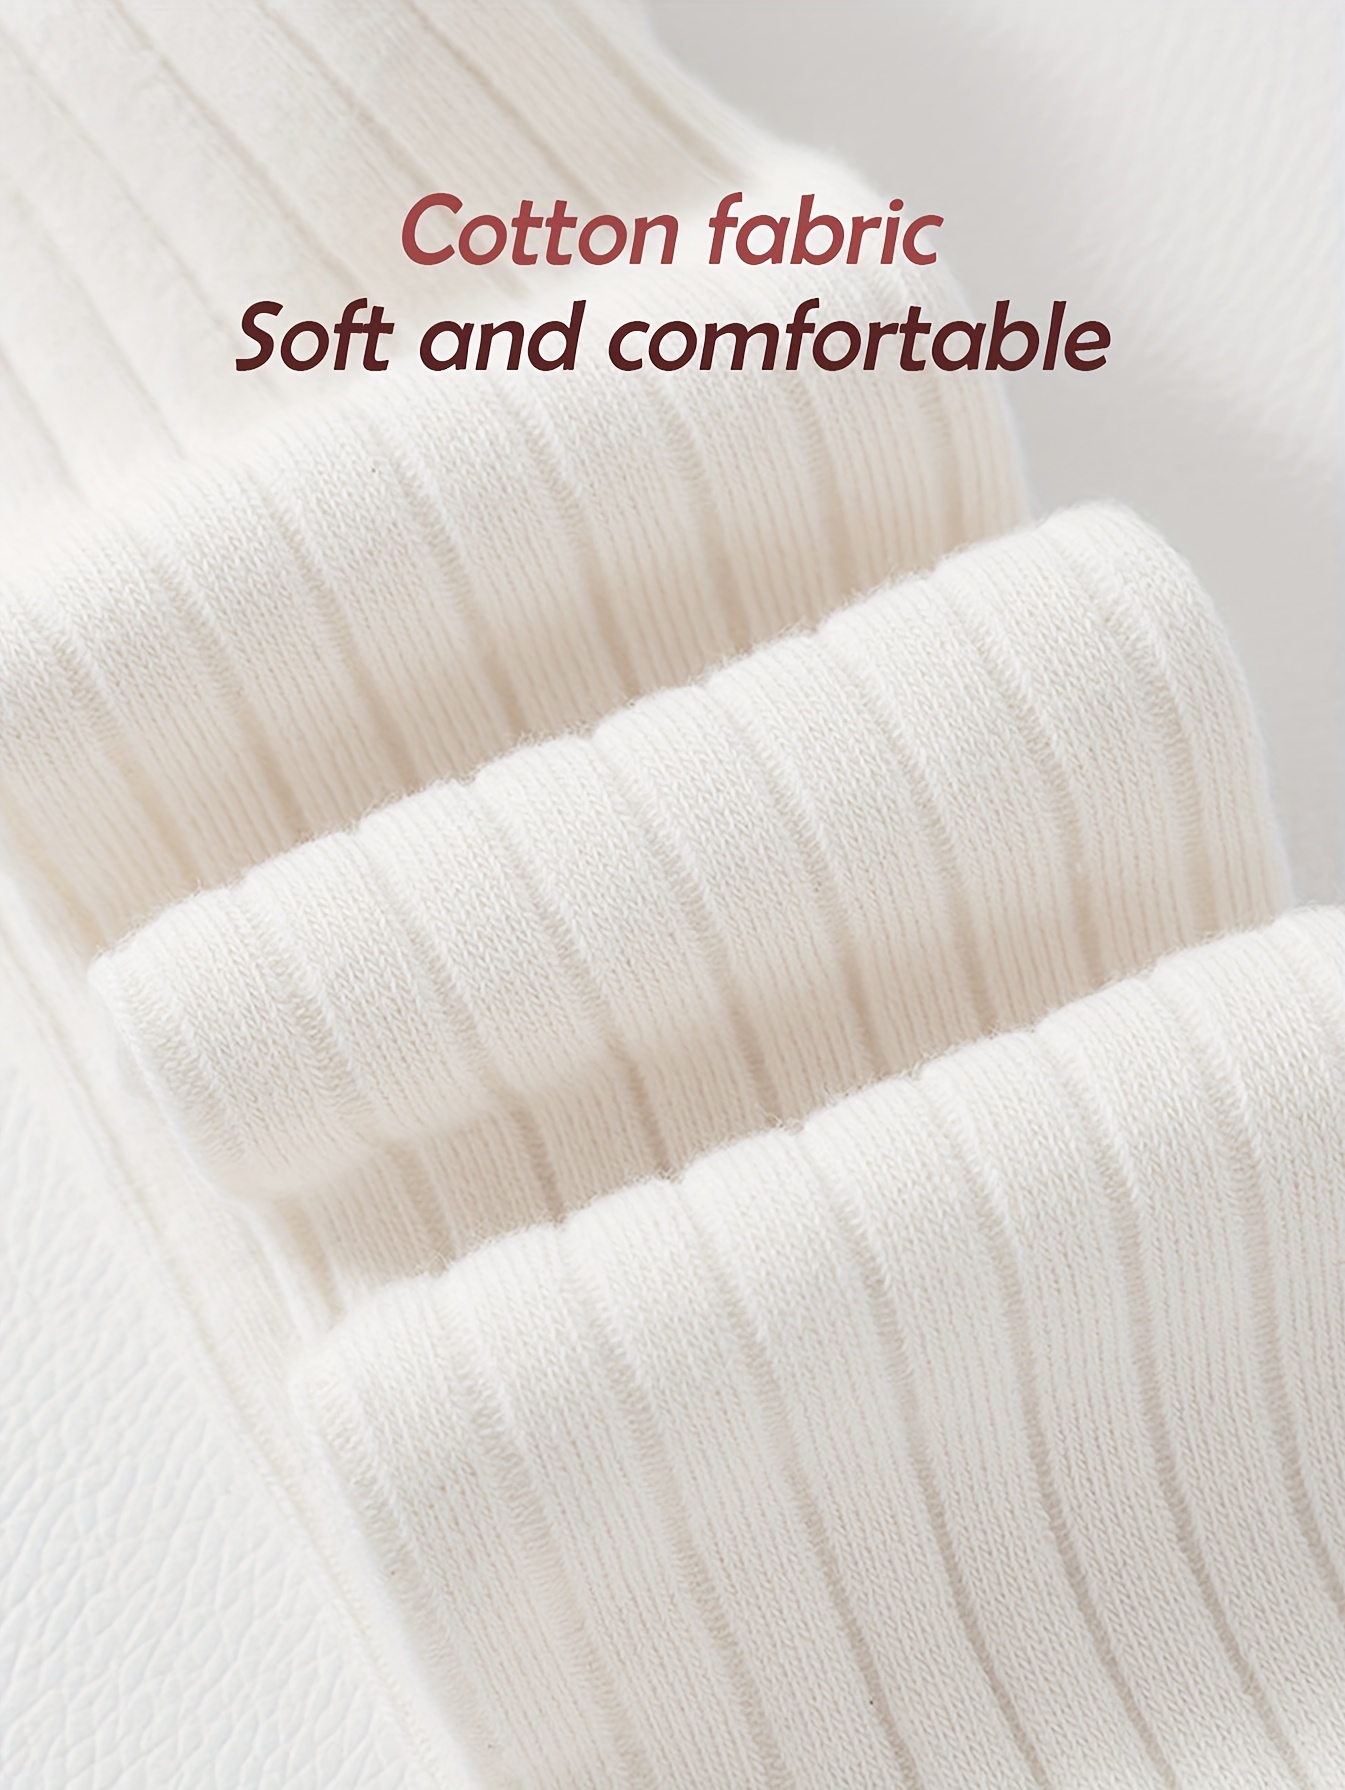 Soft White, Cotton Stretch Crop Trouser